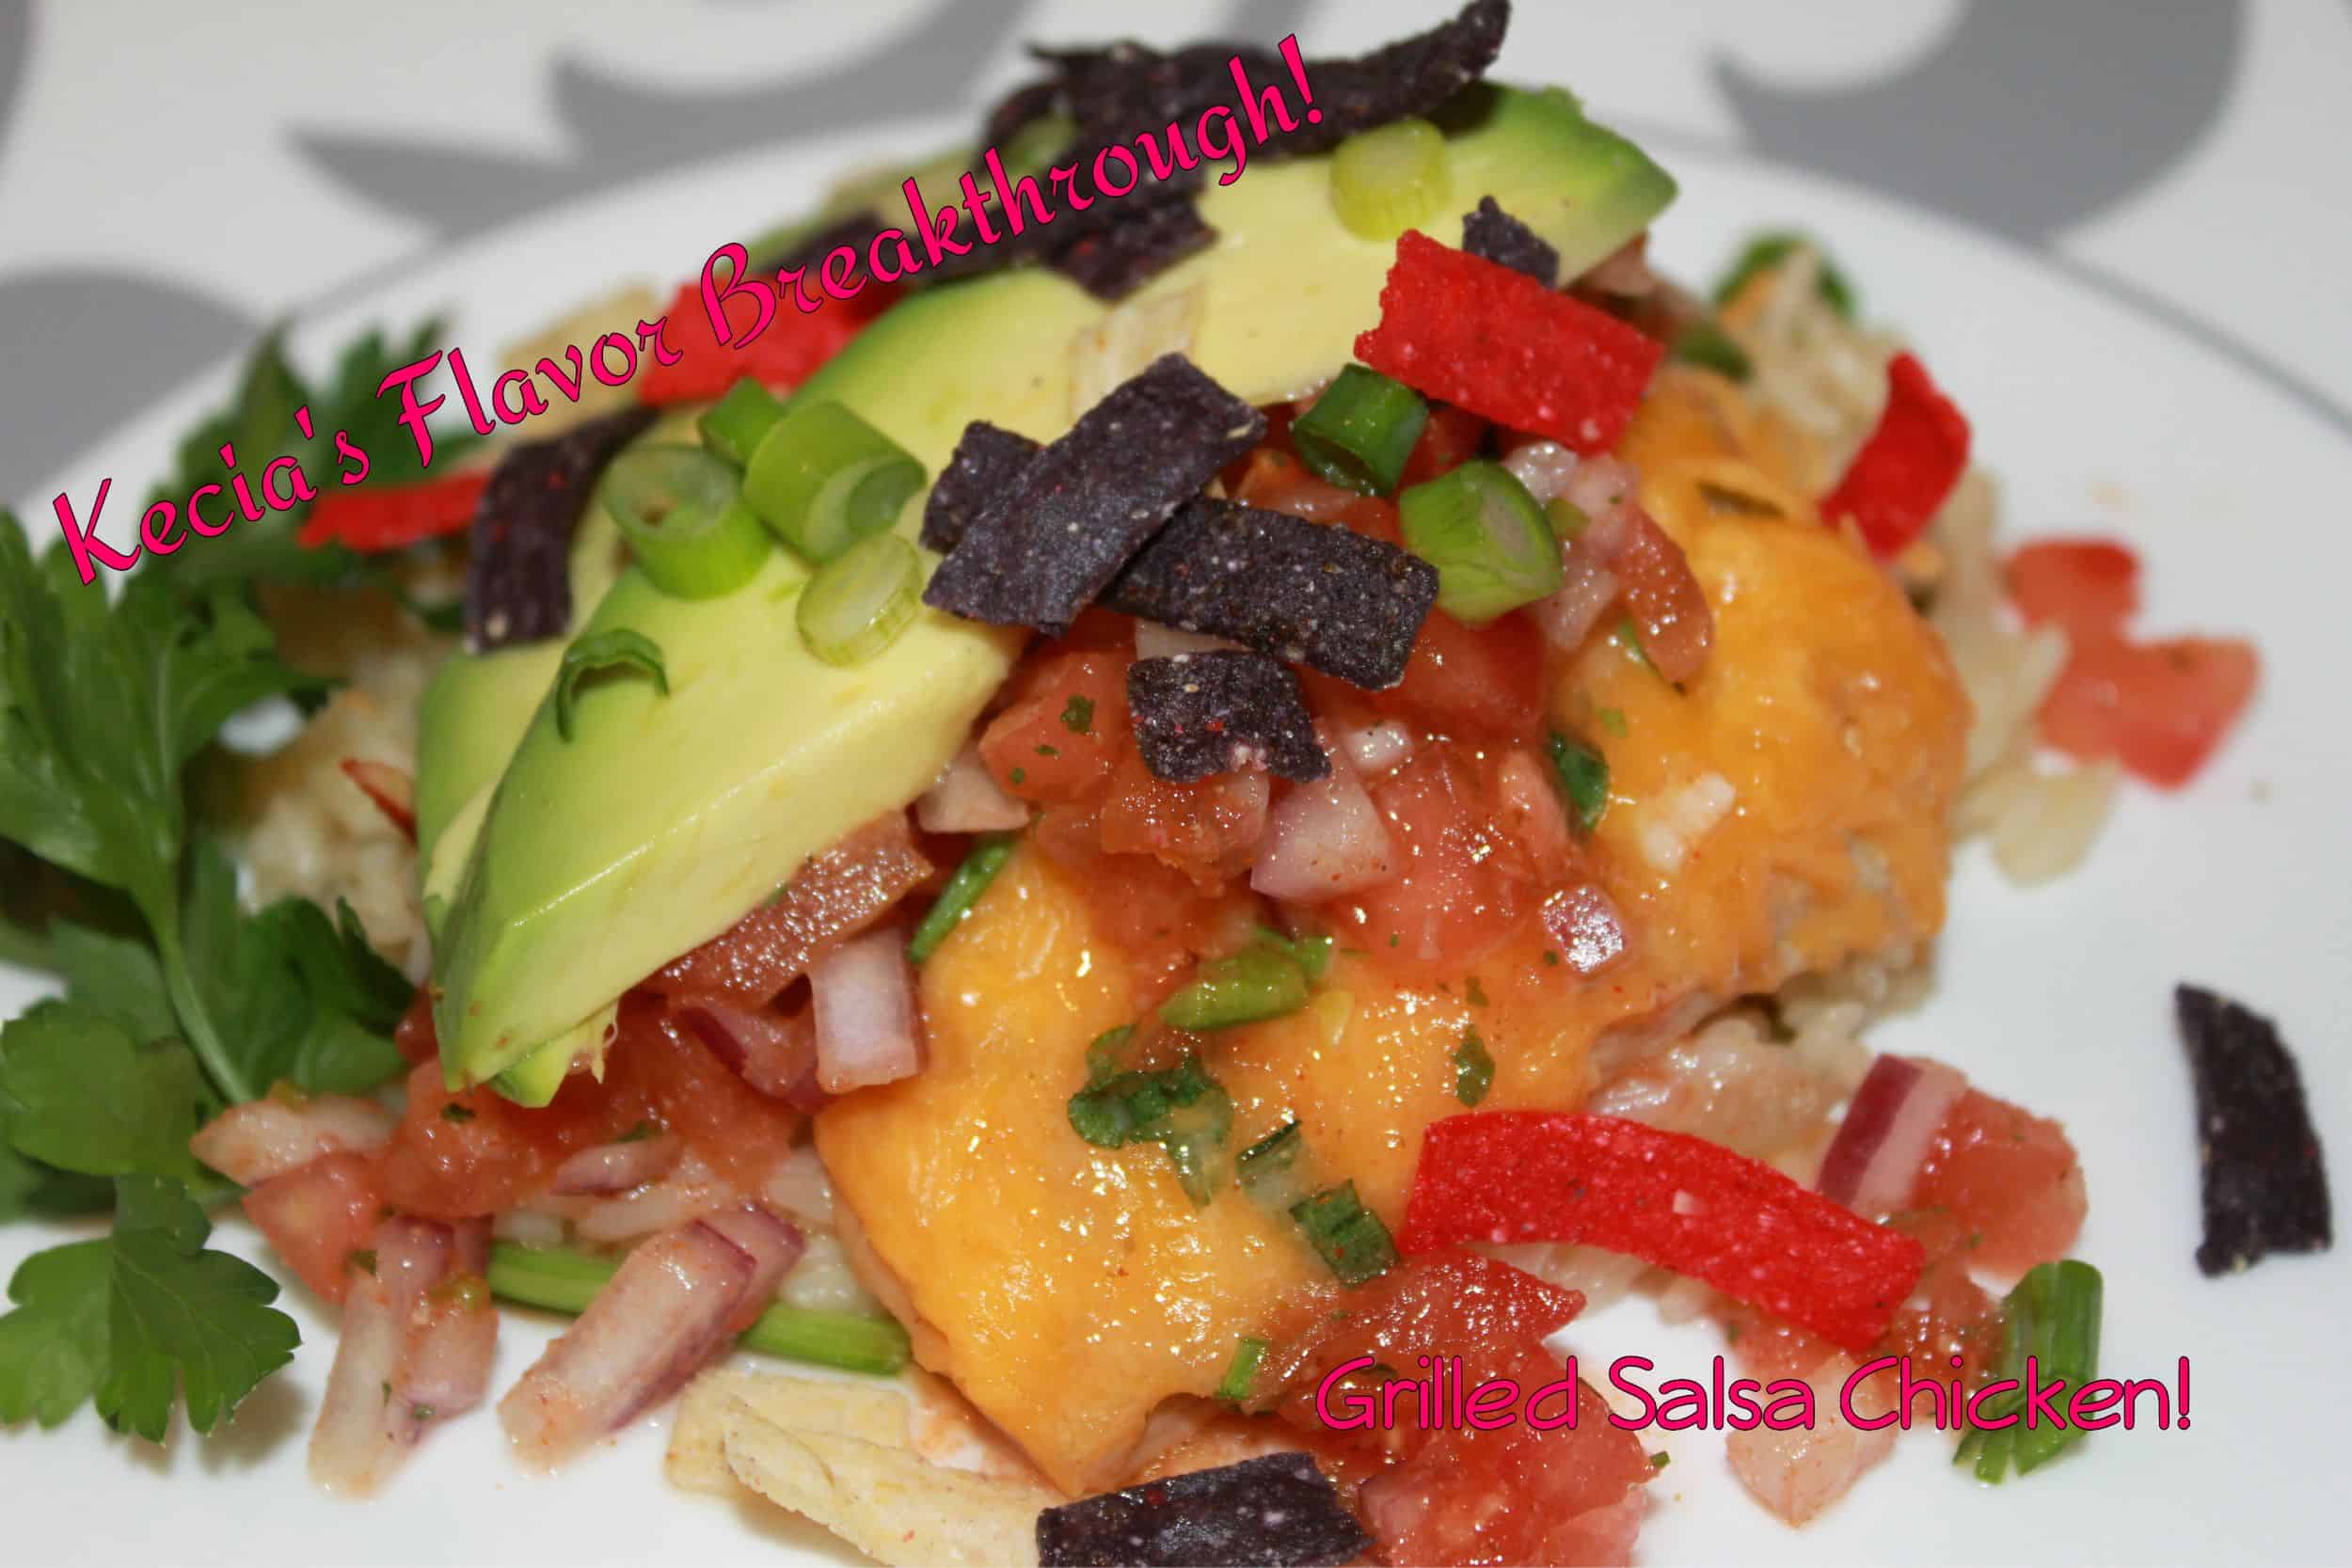 Grilled Salsa Chicken | Kecia's Flavor Breakthrough